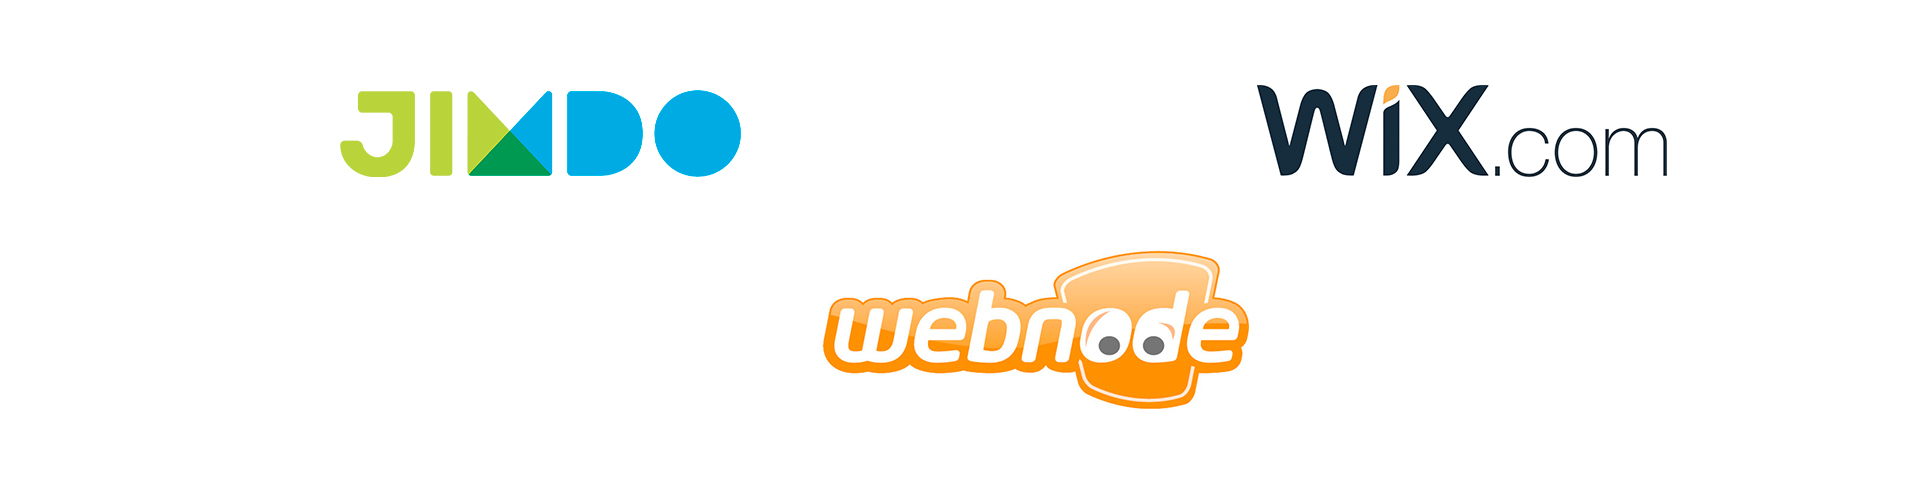 Logotipo jimdo, wix e webnode